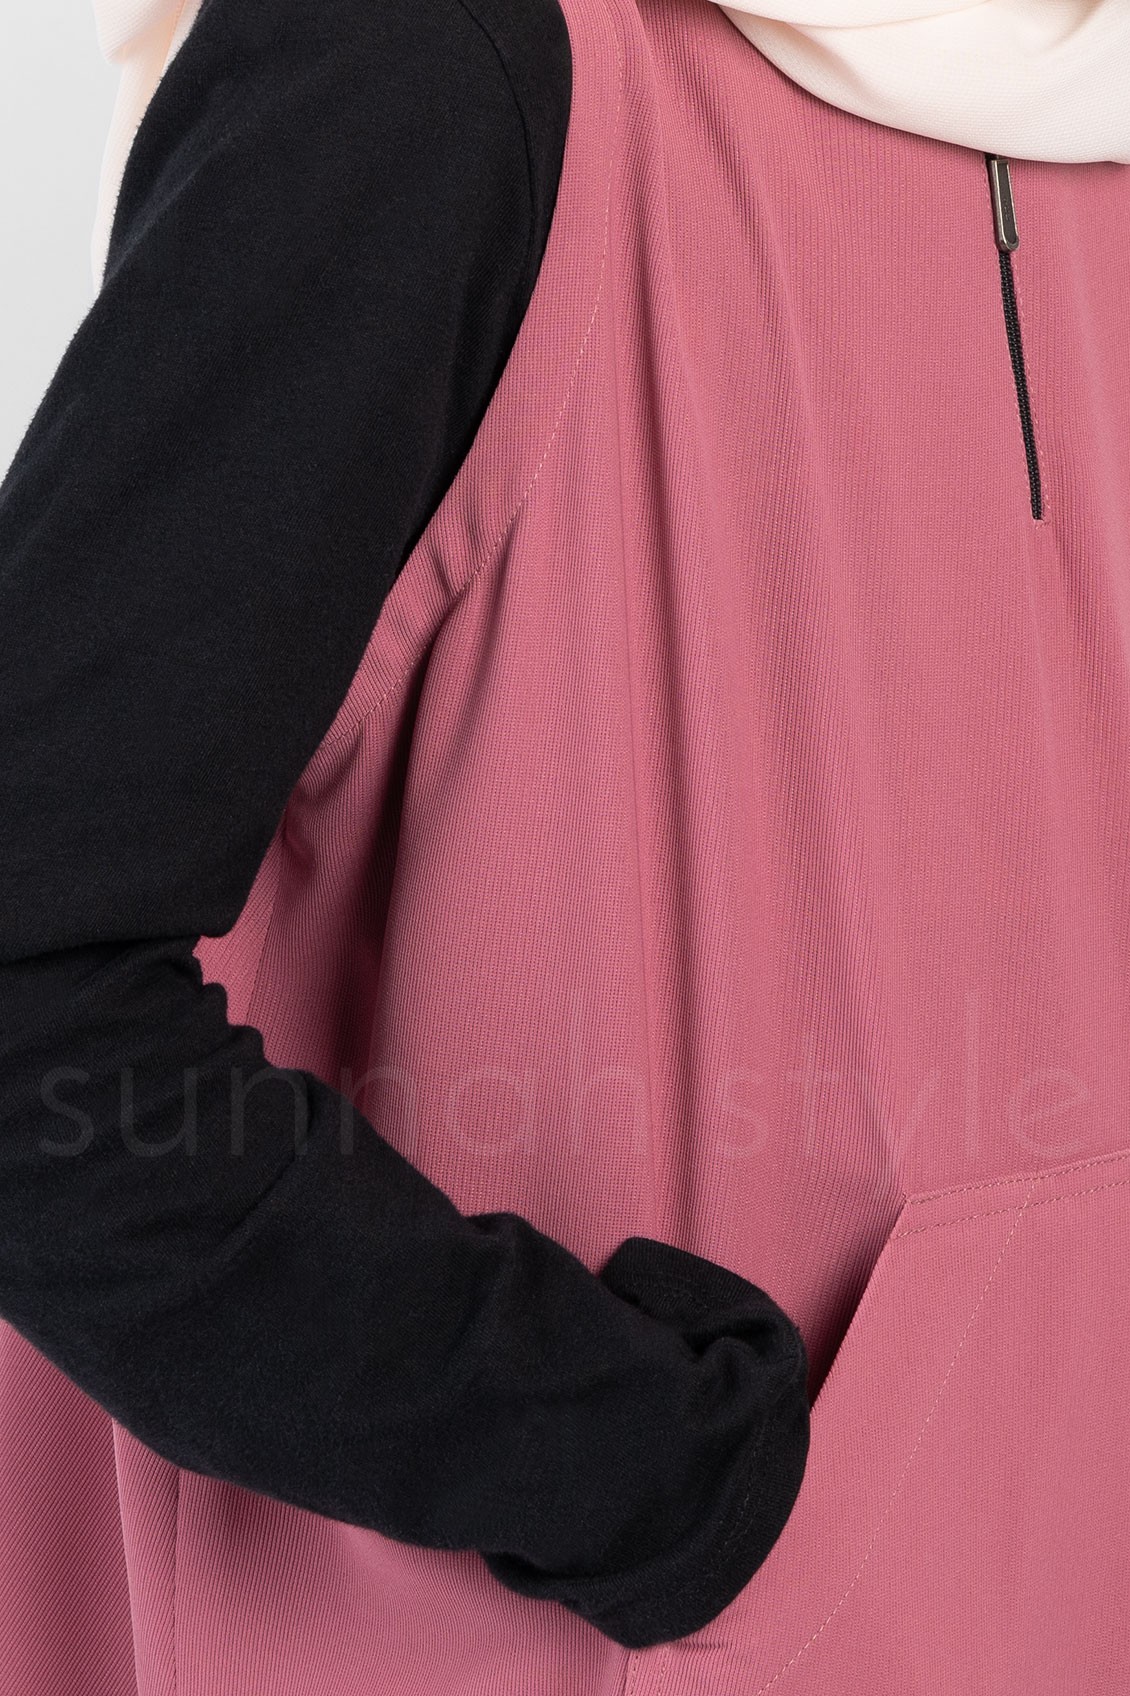 Sunnah Style Girls Essentials Sleeveless Abaya Desert Rose Pink